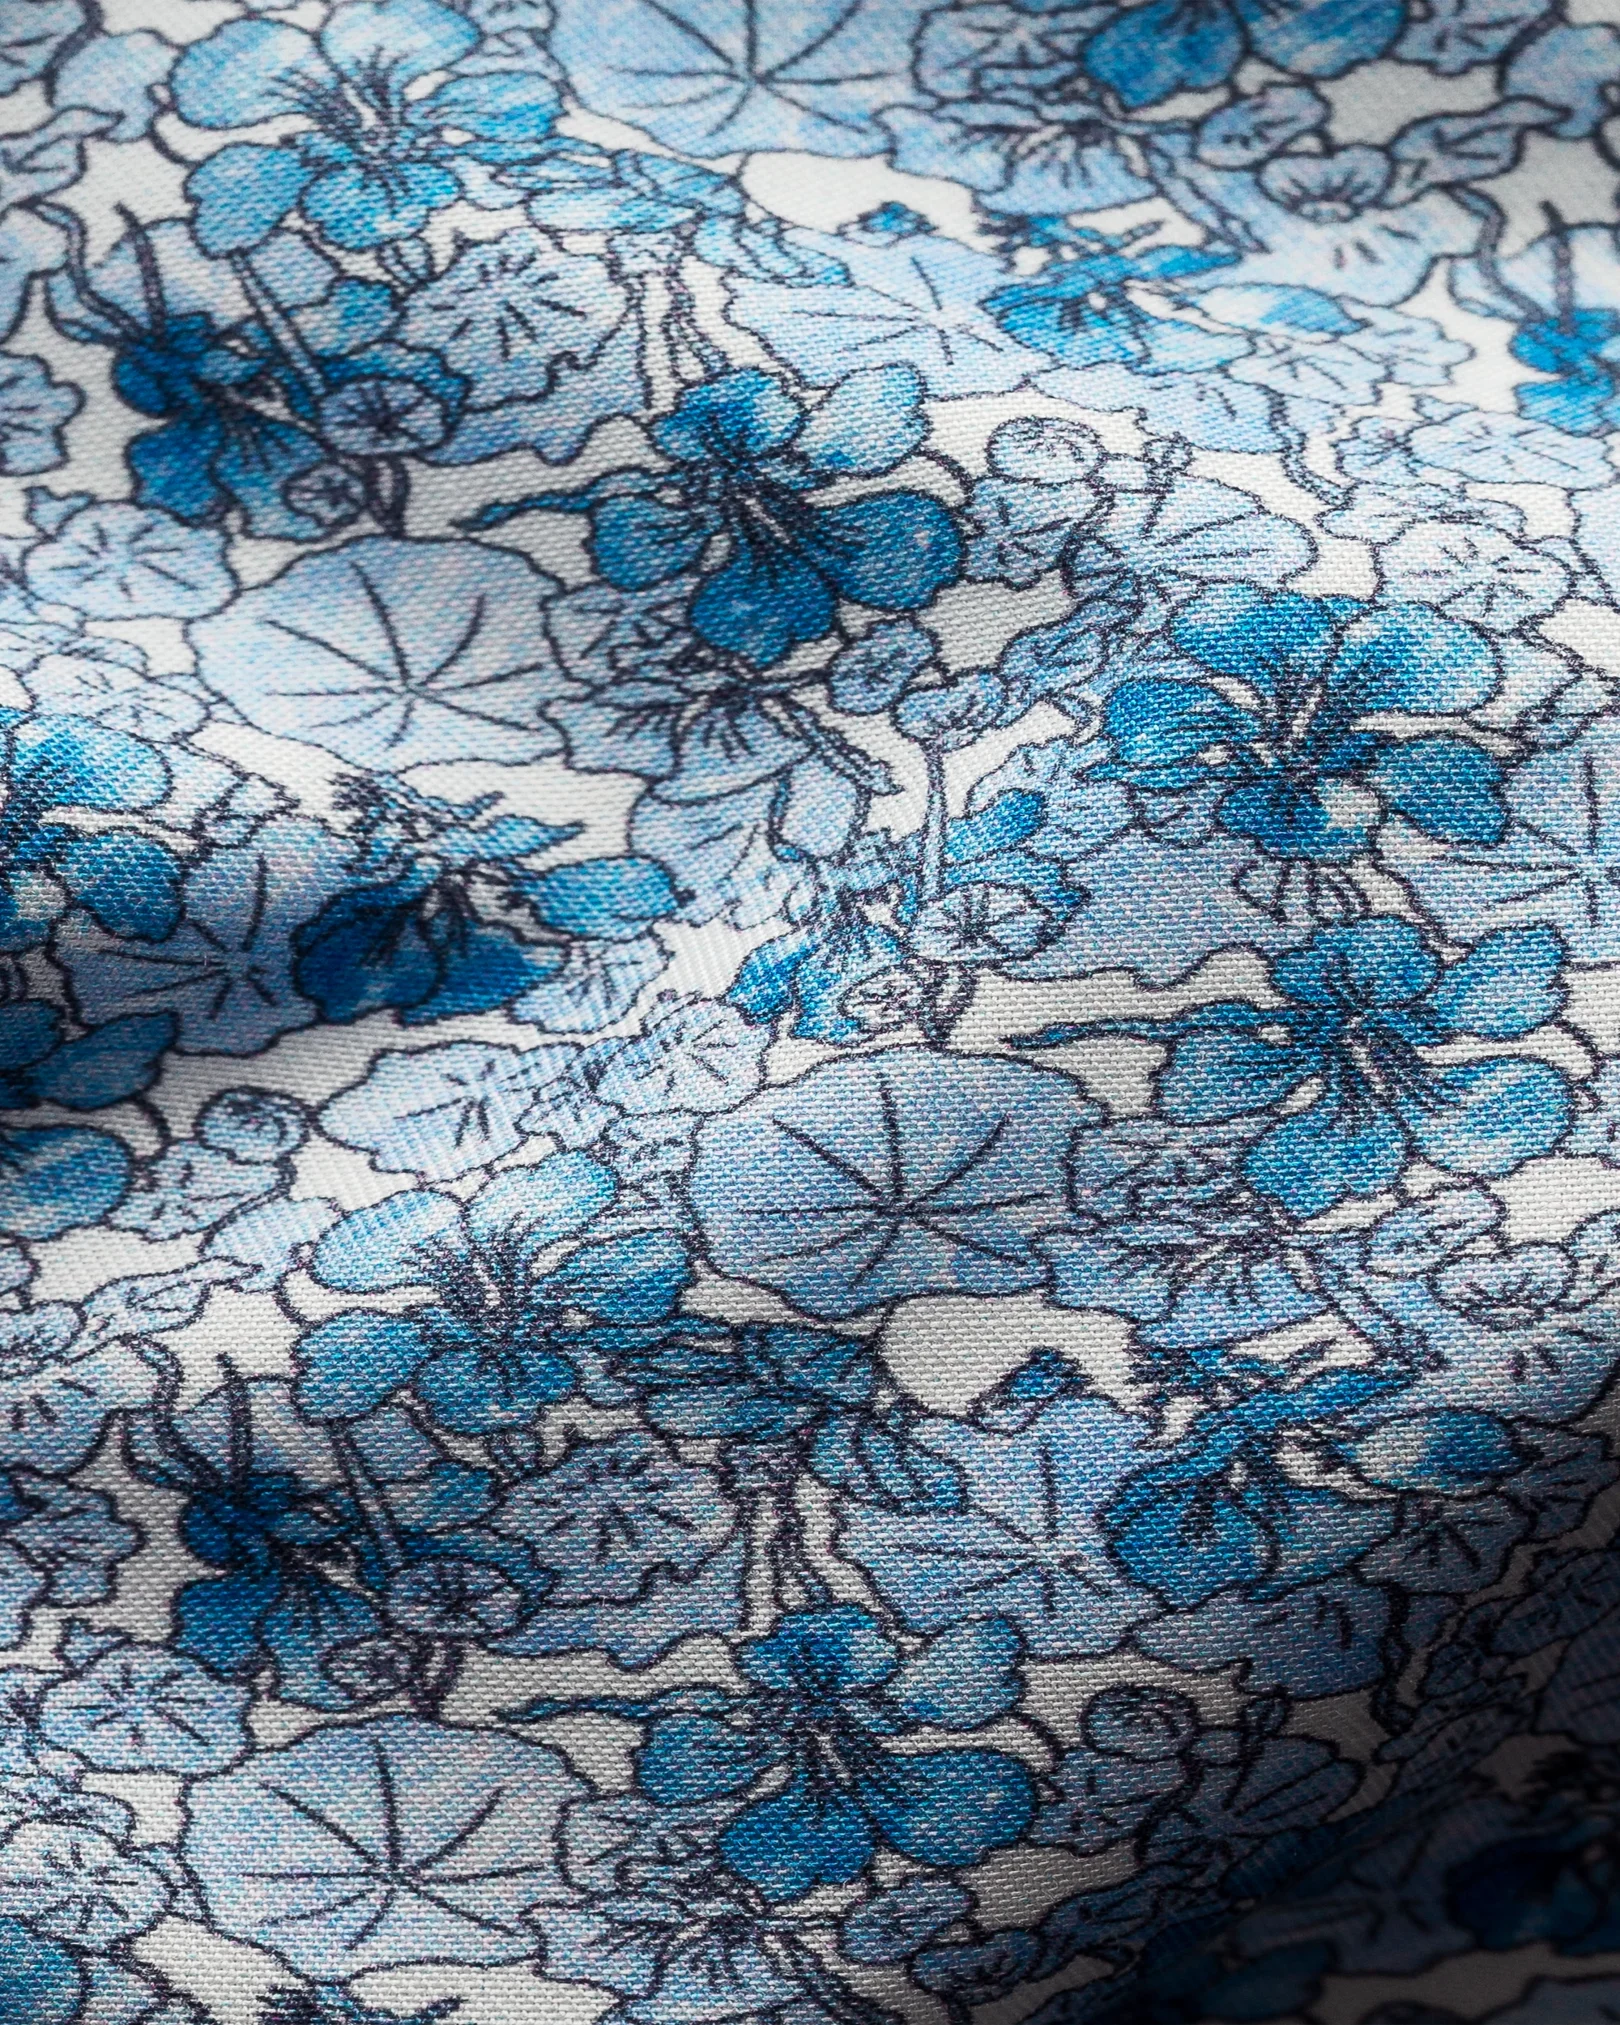 Eton - blue floral print twill shirt